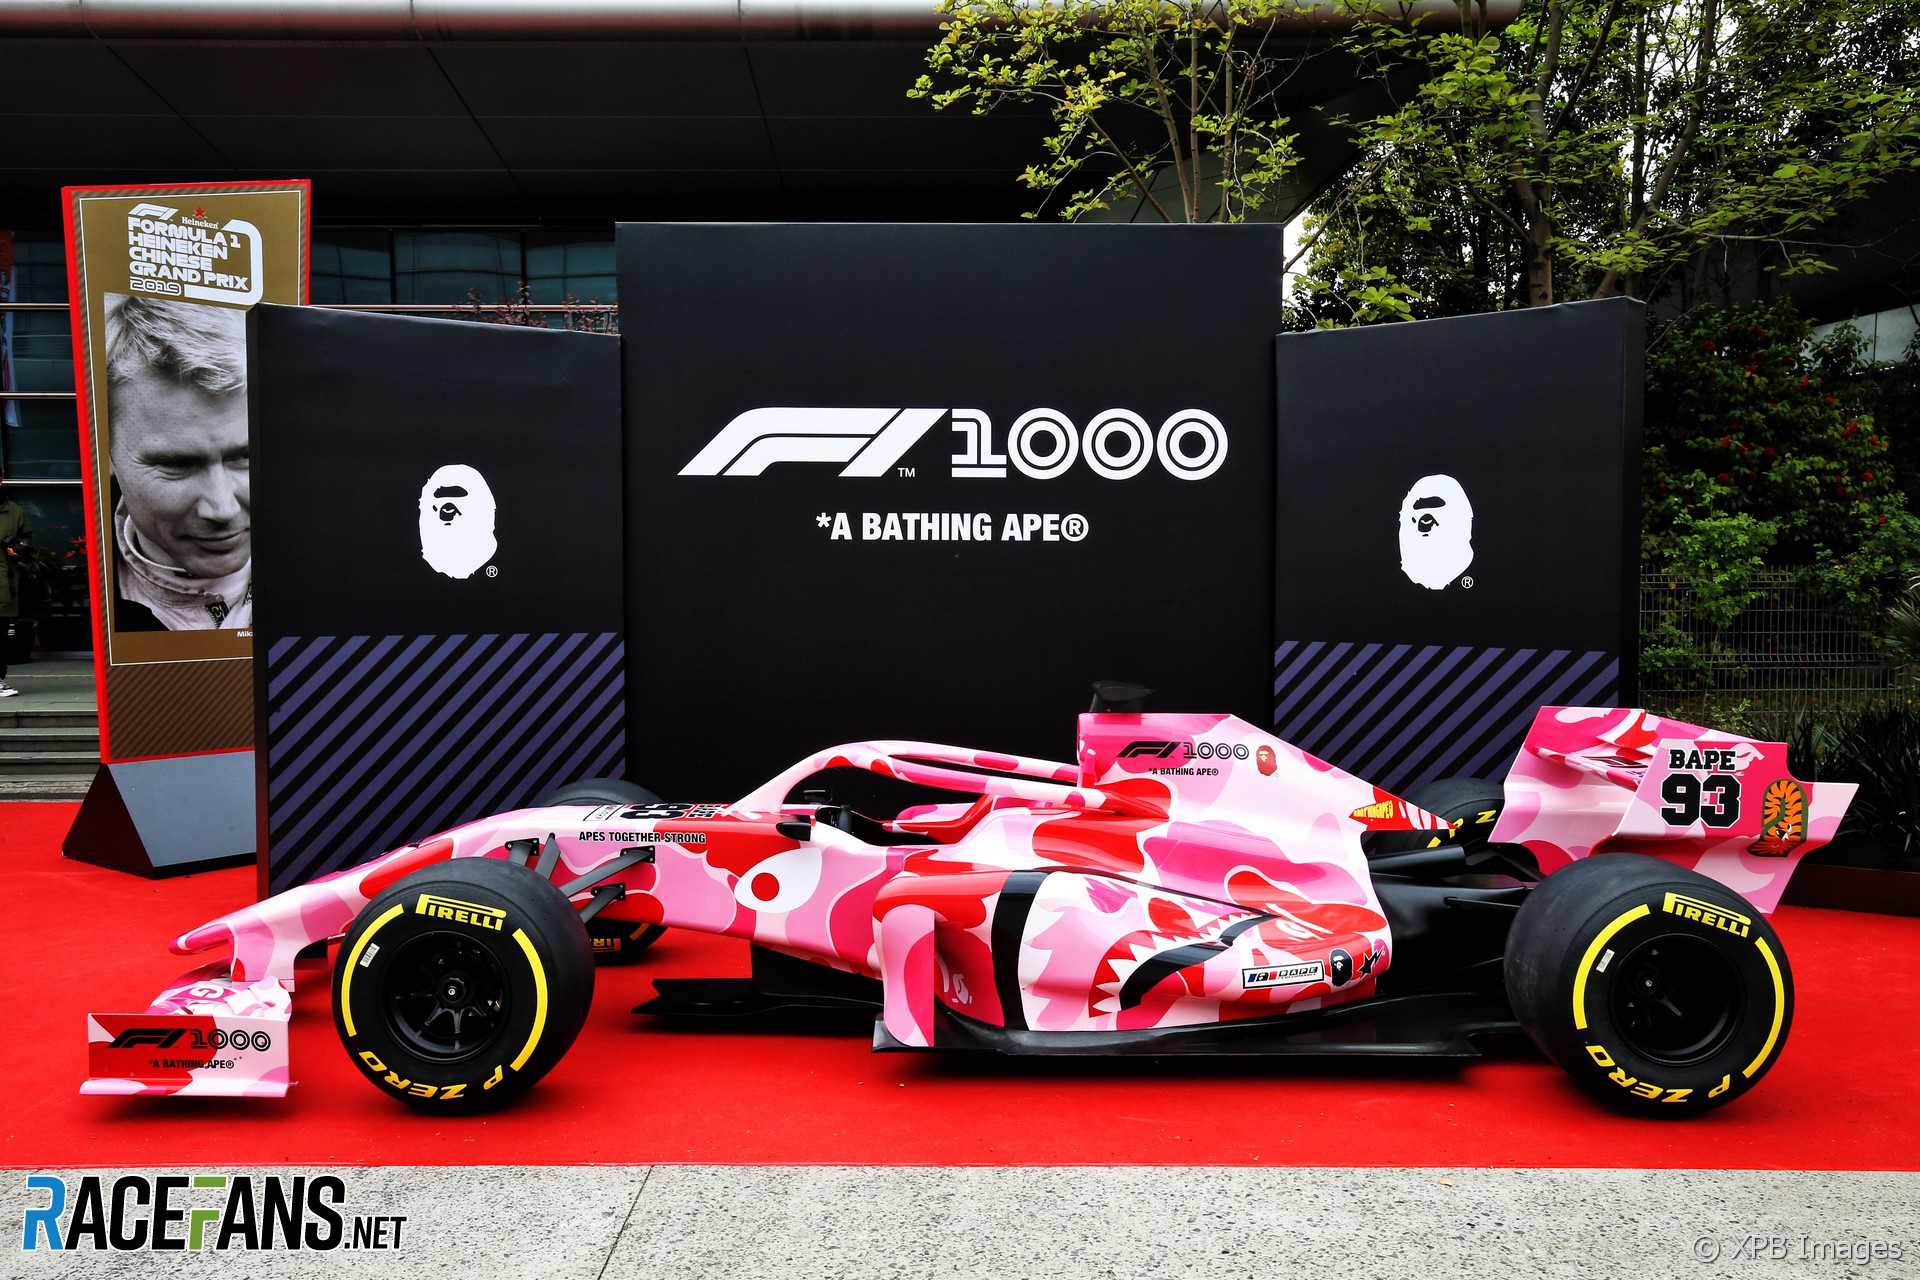 1000th race car, Shanghai International Circuit, 2019